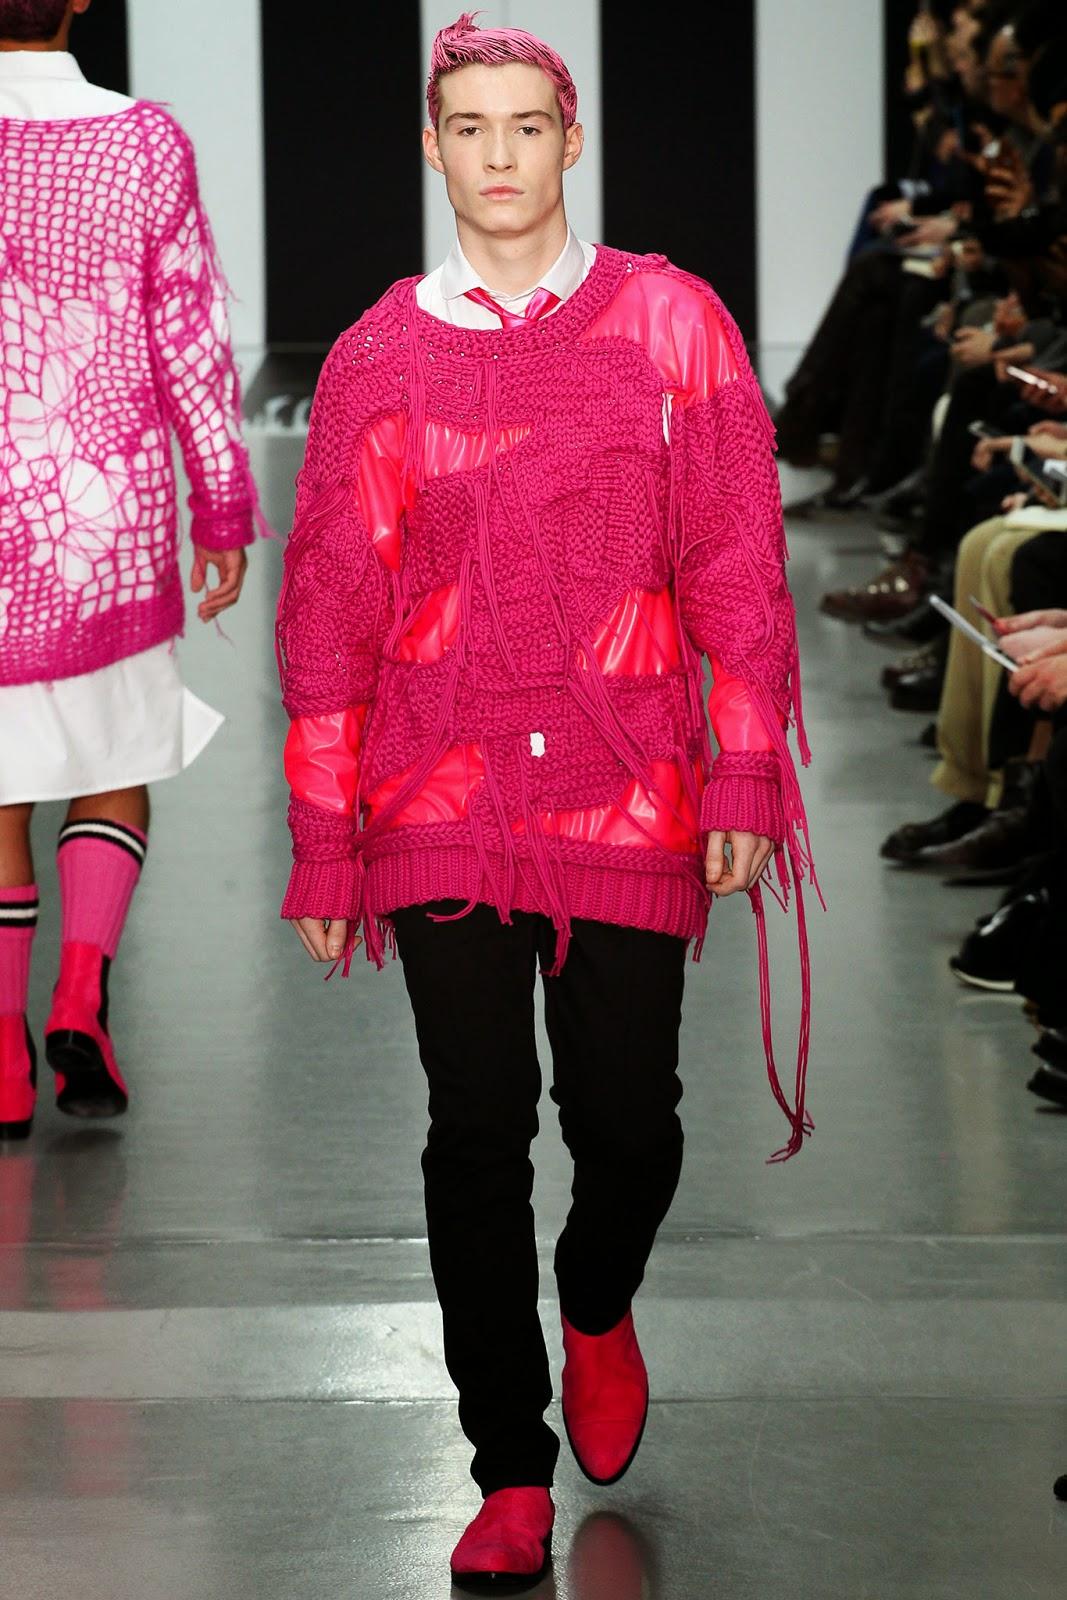 Life is better in pink : Le défilé Sibling Menswear pour l'hiver 2015...